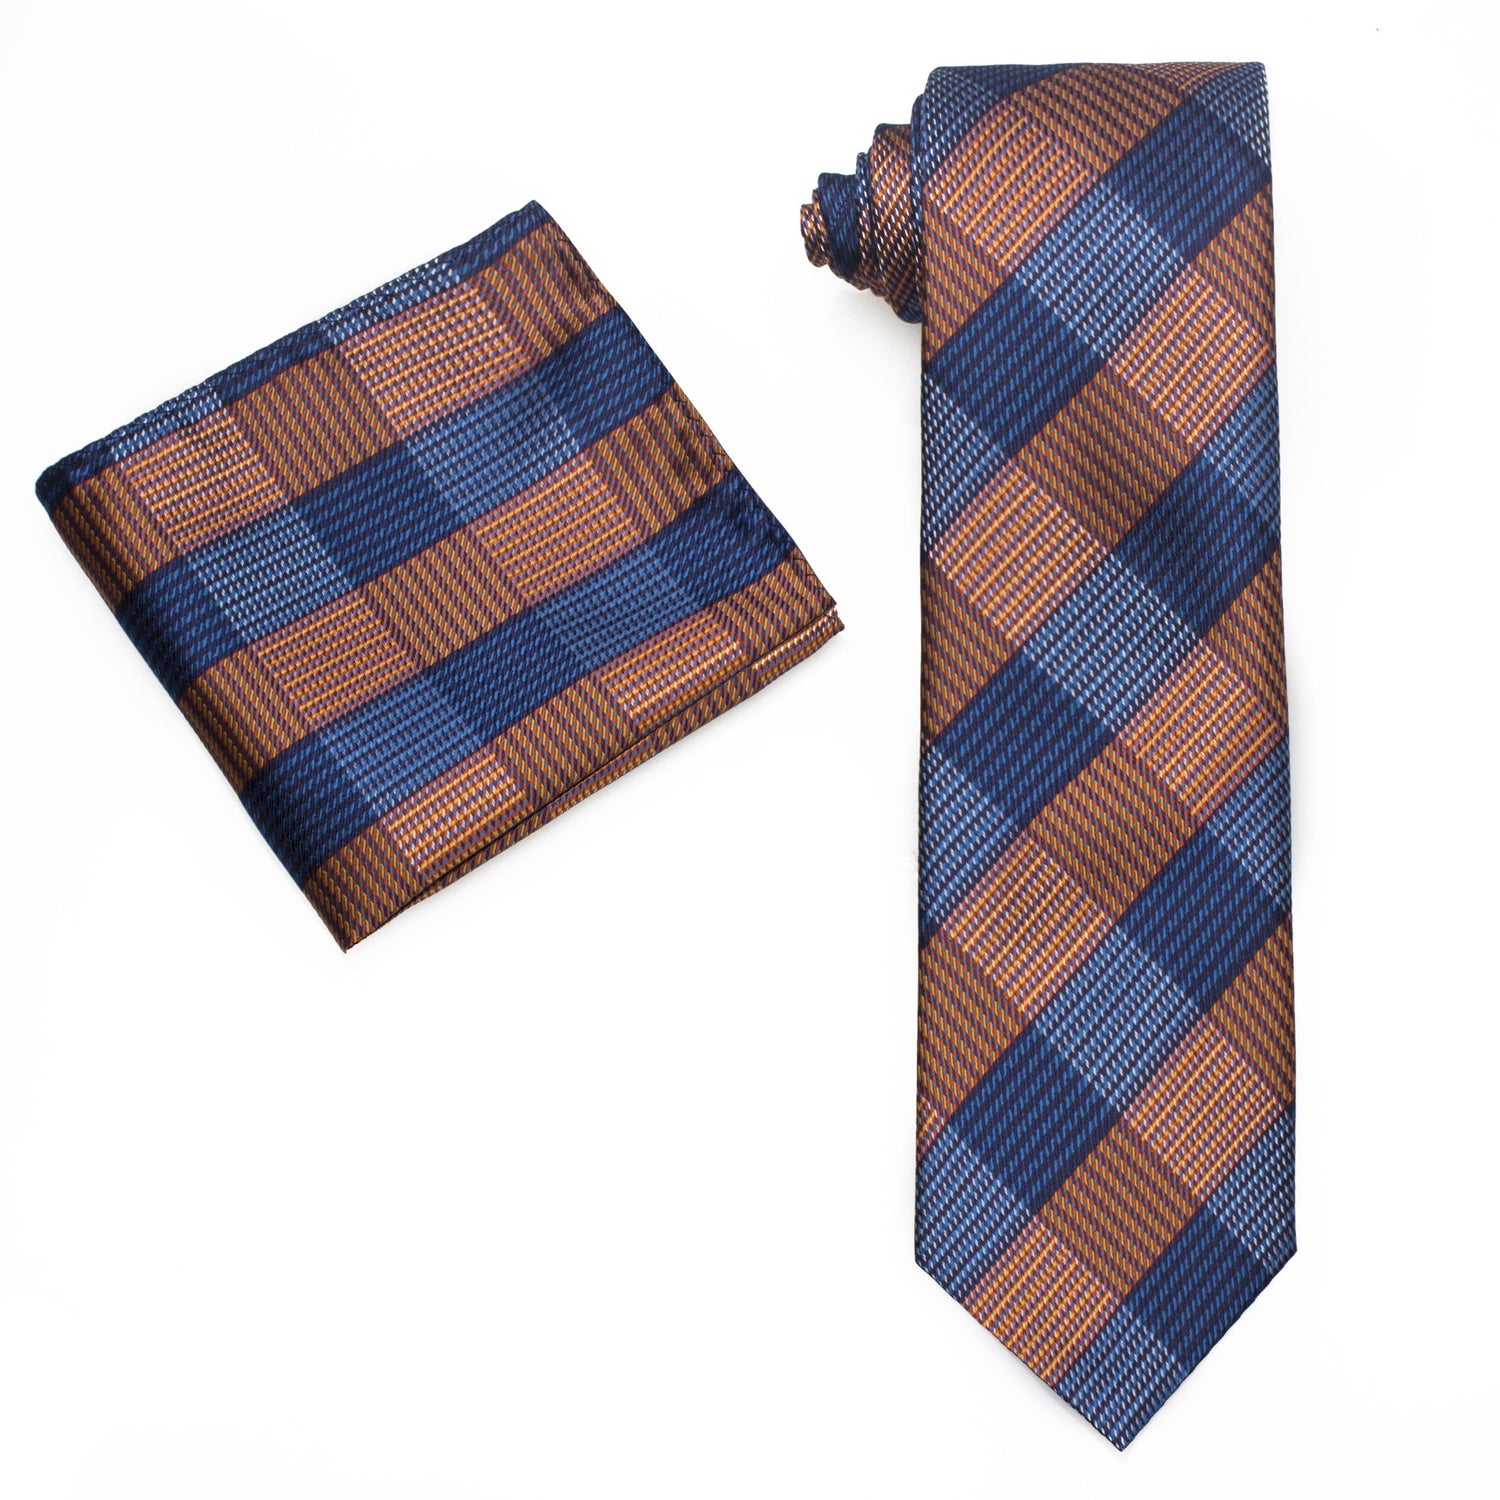 Alt View: Orange and Blue Plaid Tie and Pocket Square